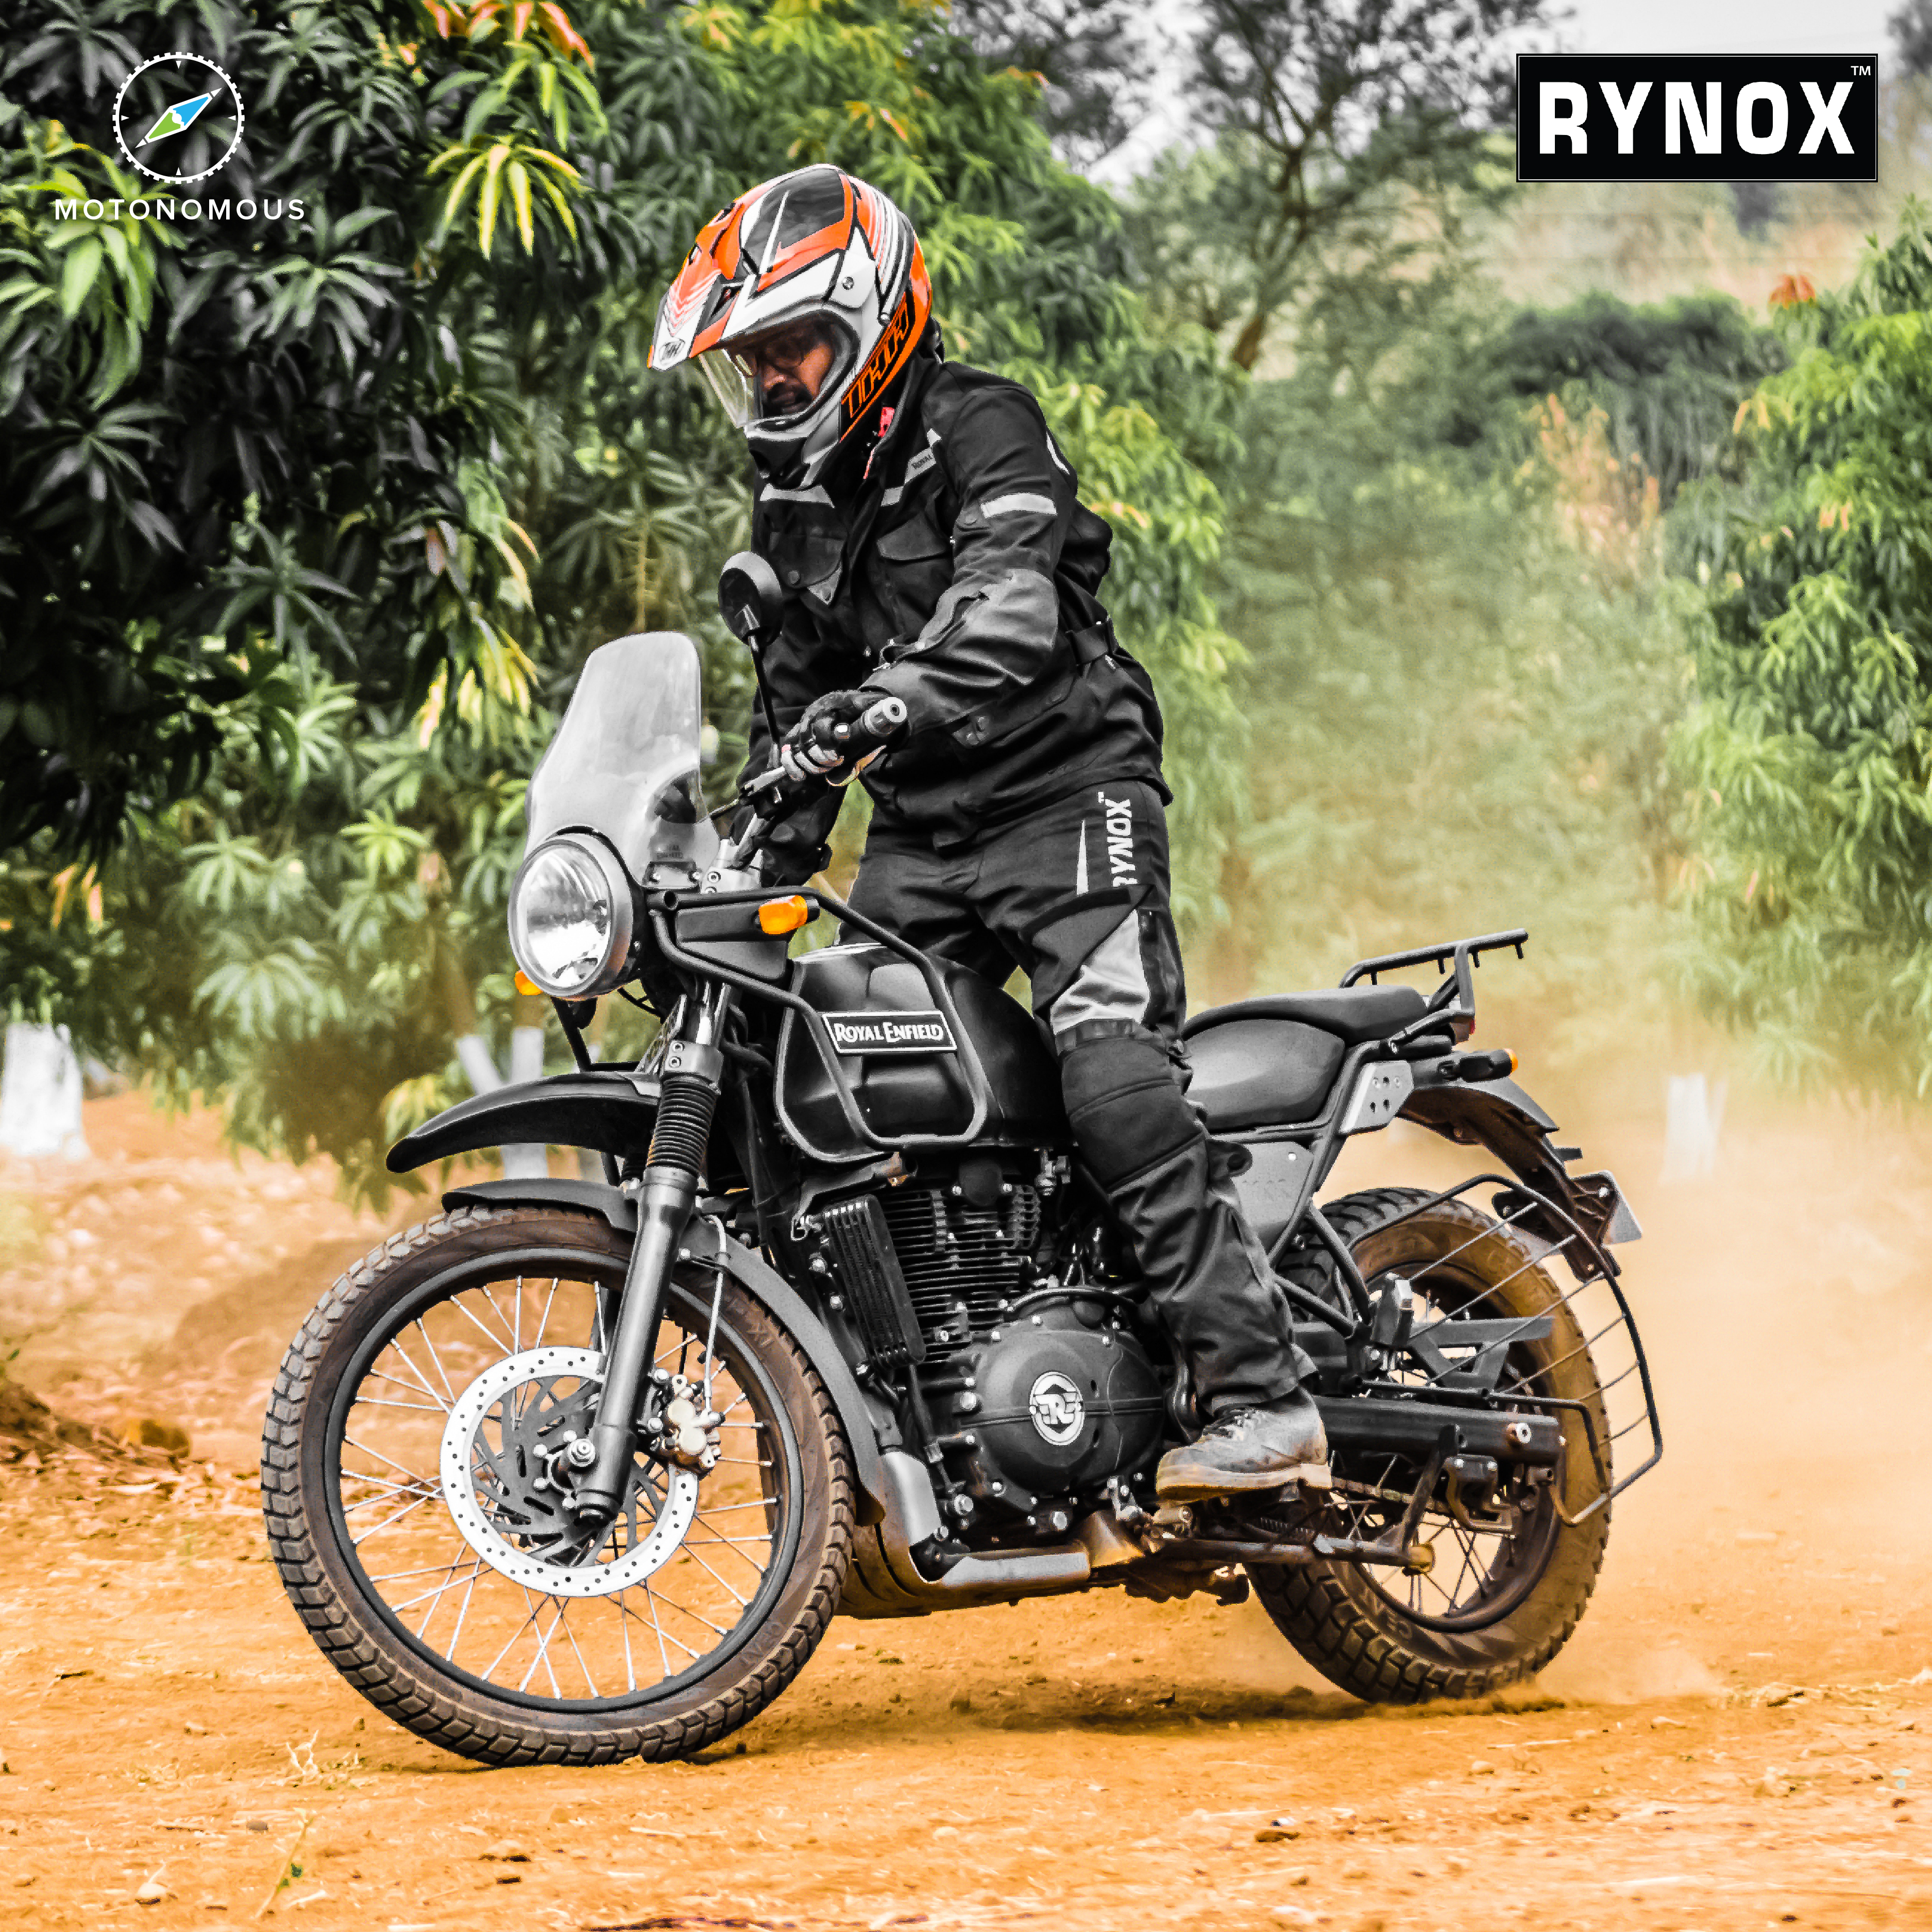 Rynox Advento Pants  Motorcycle Riding Pants  Impact Protection   Abrasion Resistance  Active Ventilation  Black  Small  Amazonin Car   Motorbike